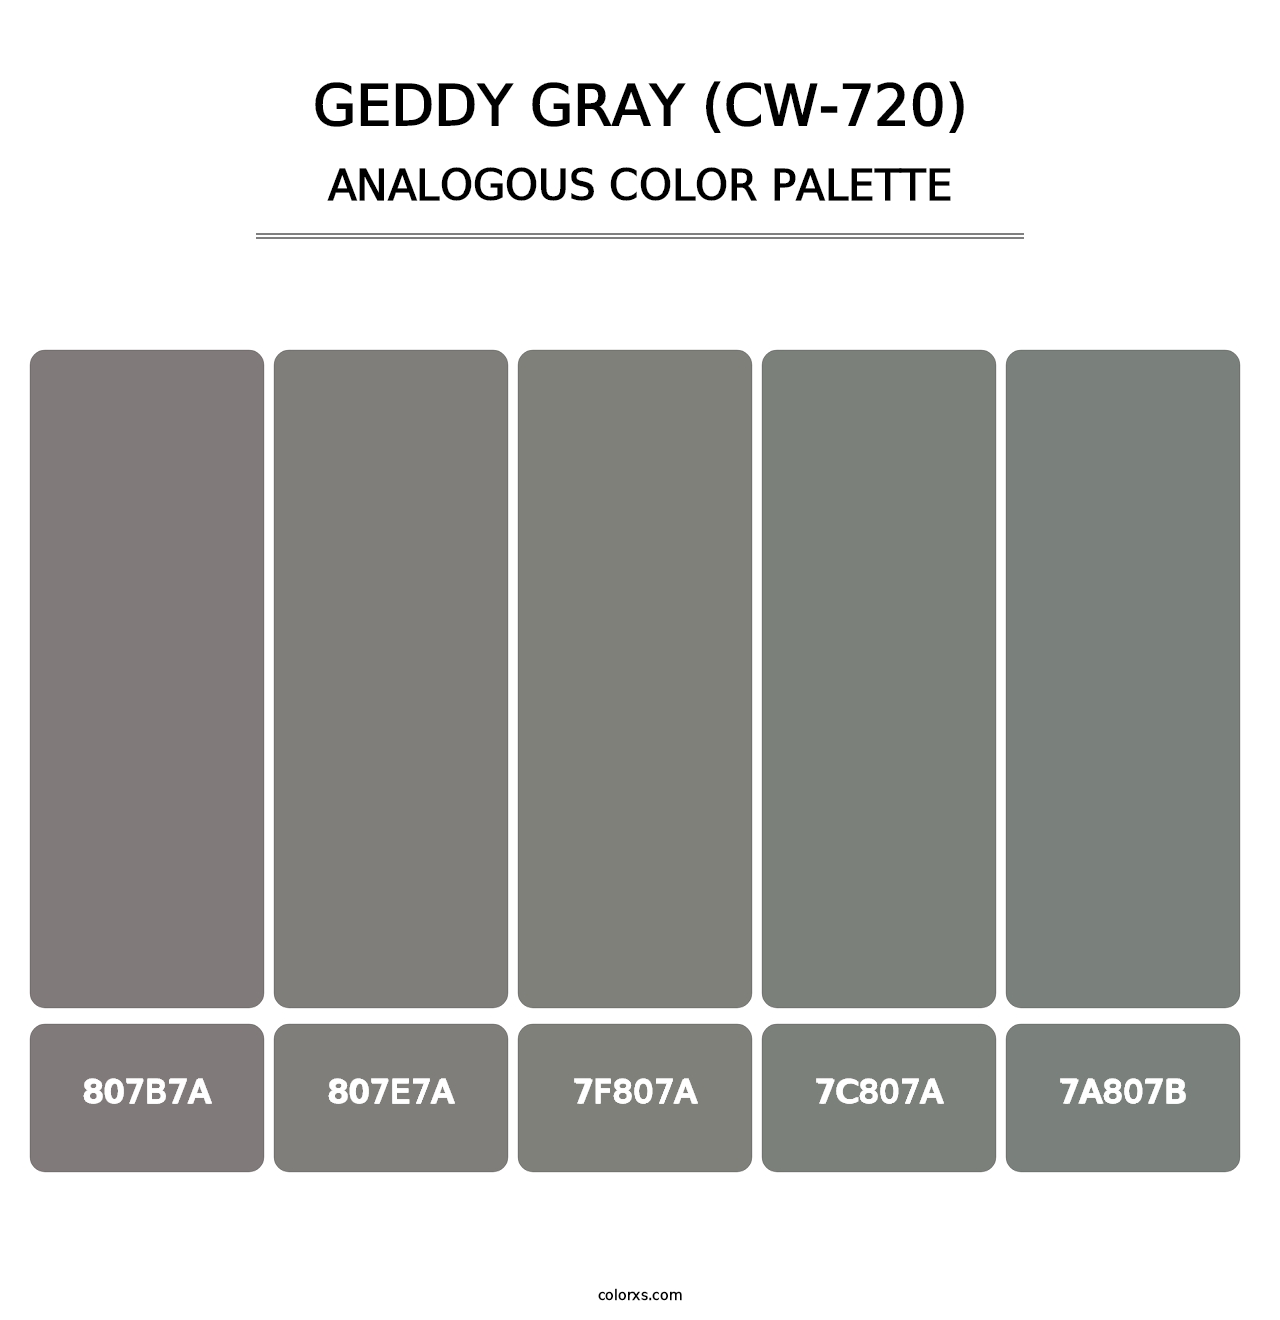 Geddy Gray (CW-720) - Analogous Color Palette